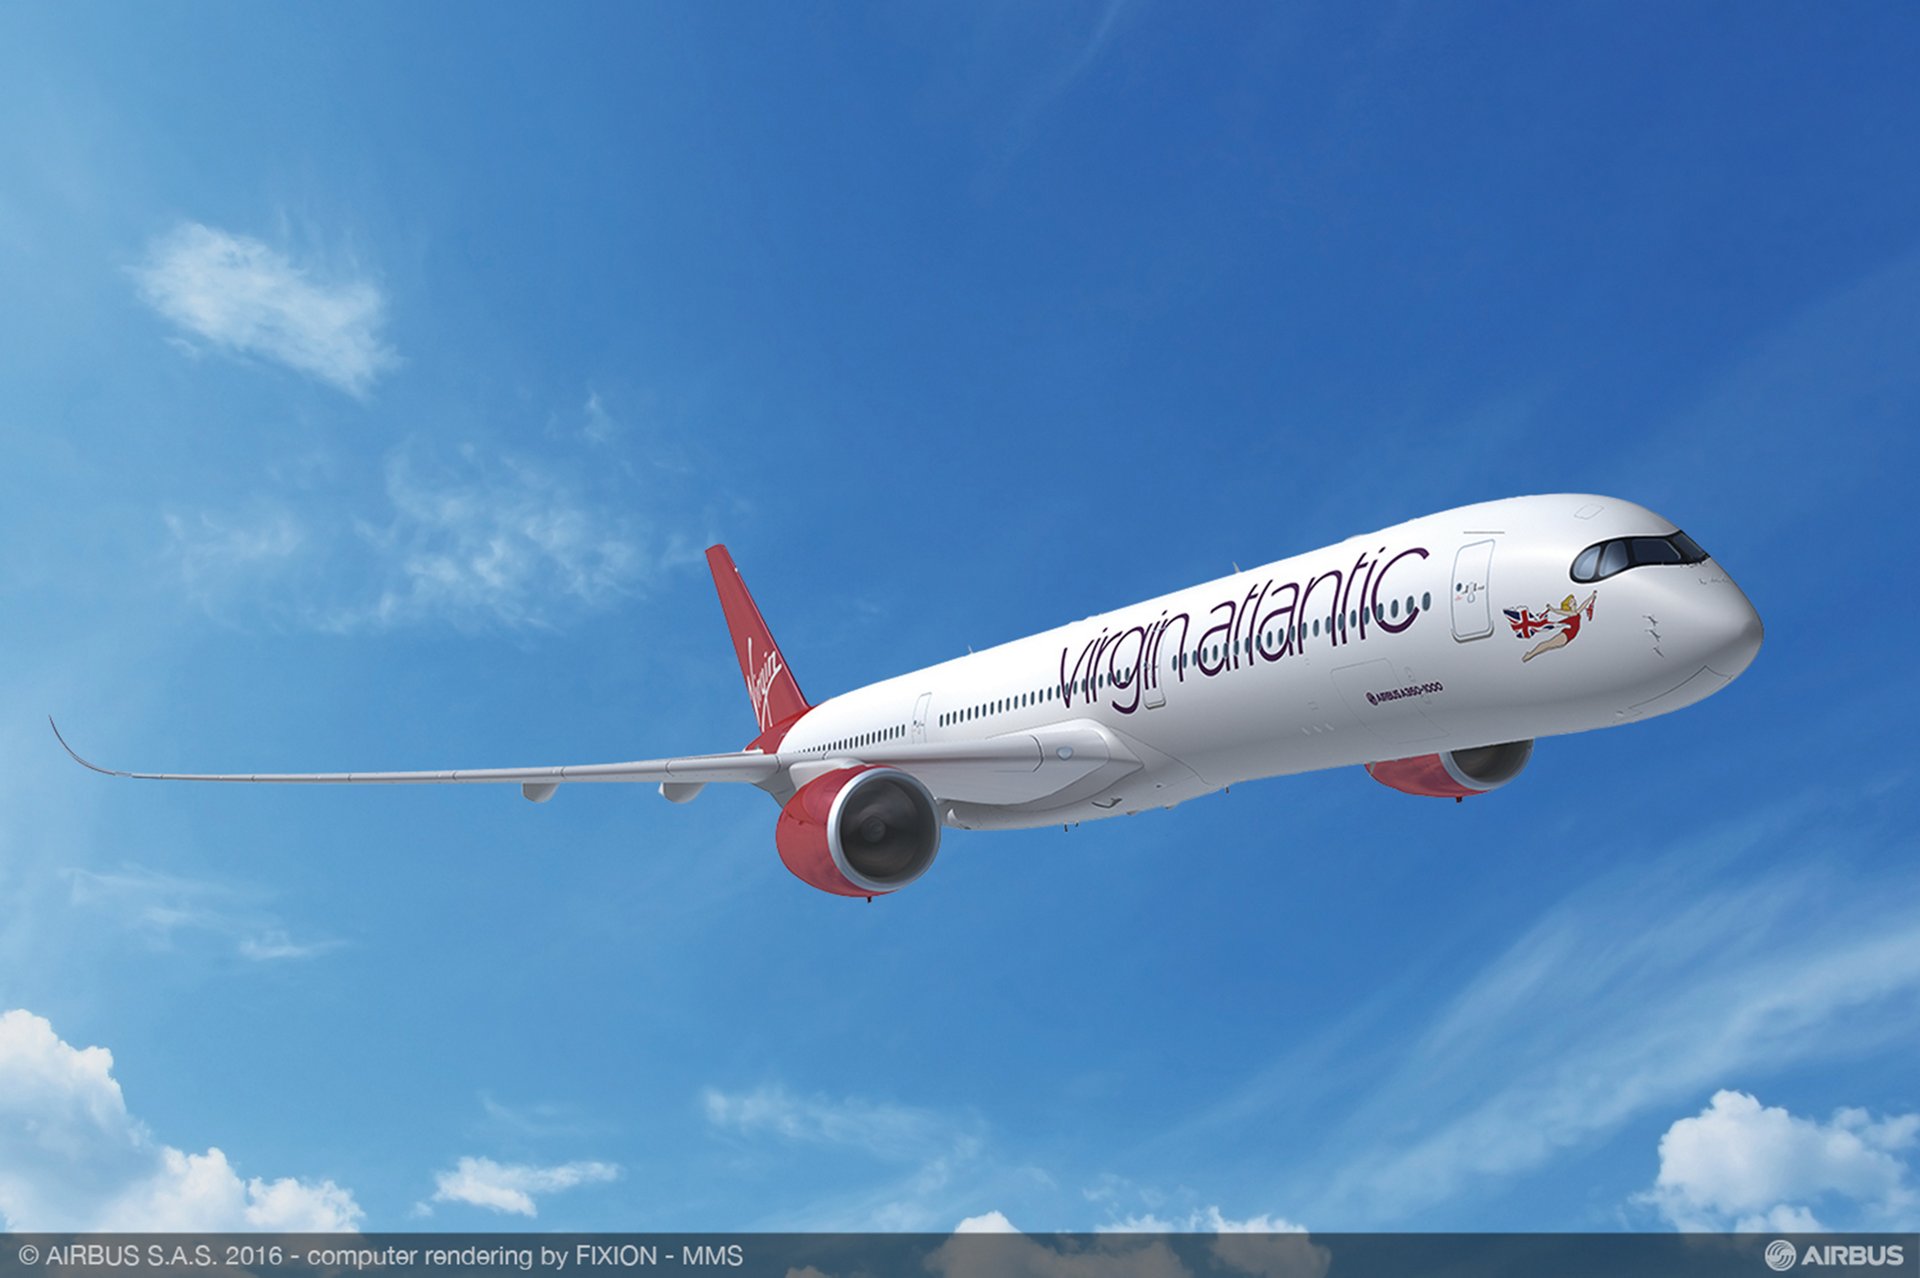 Virgin Atlantic Selects The A350 Xwb As Its Future Flagship